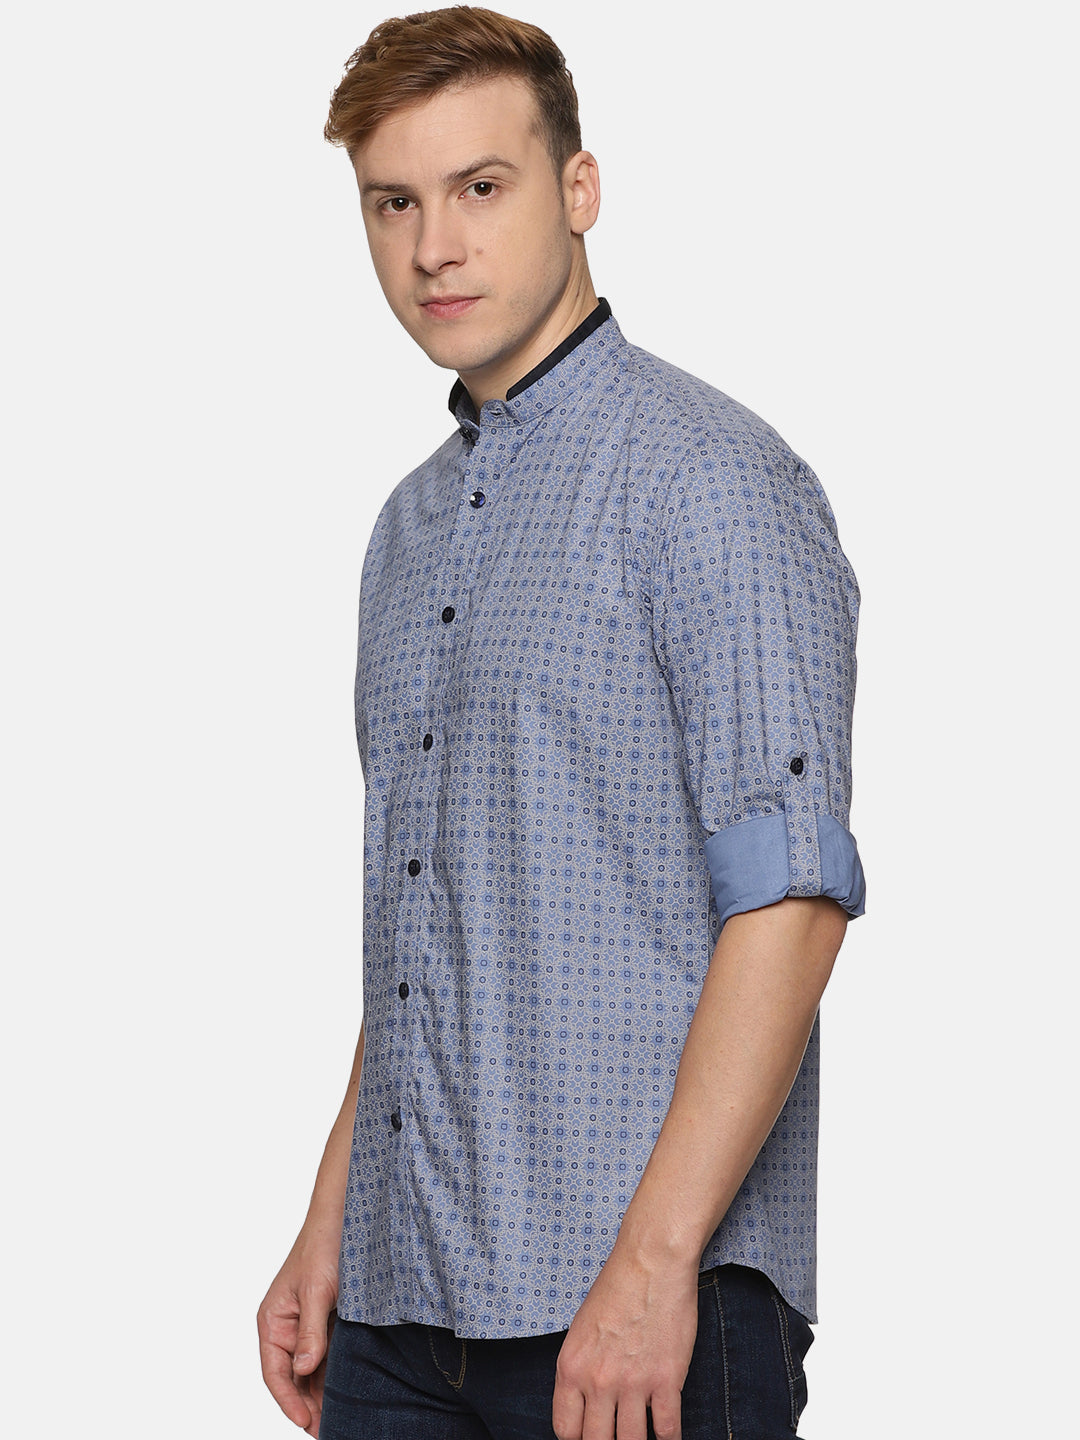 Men Blue Printed Slim Fit Casual Shirt, Men's Full Sleeve Cotton Shirt